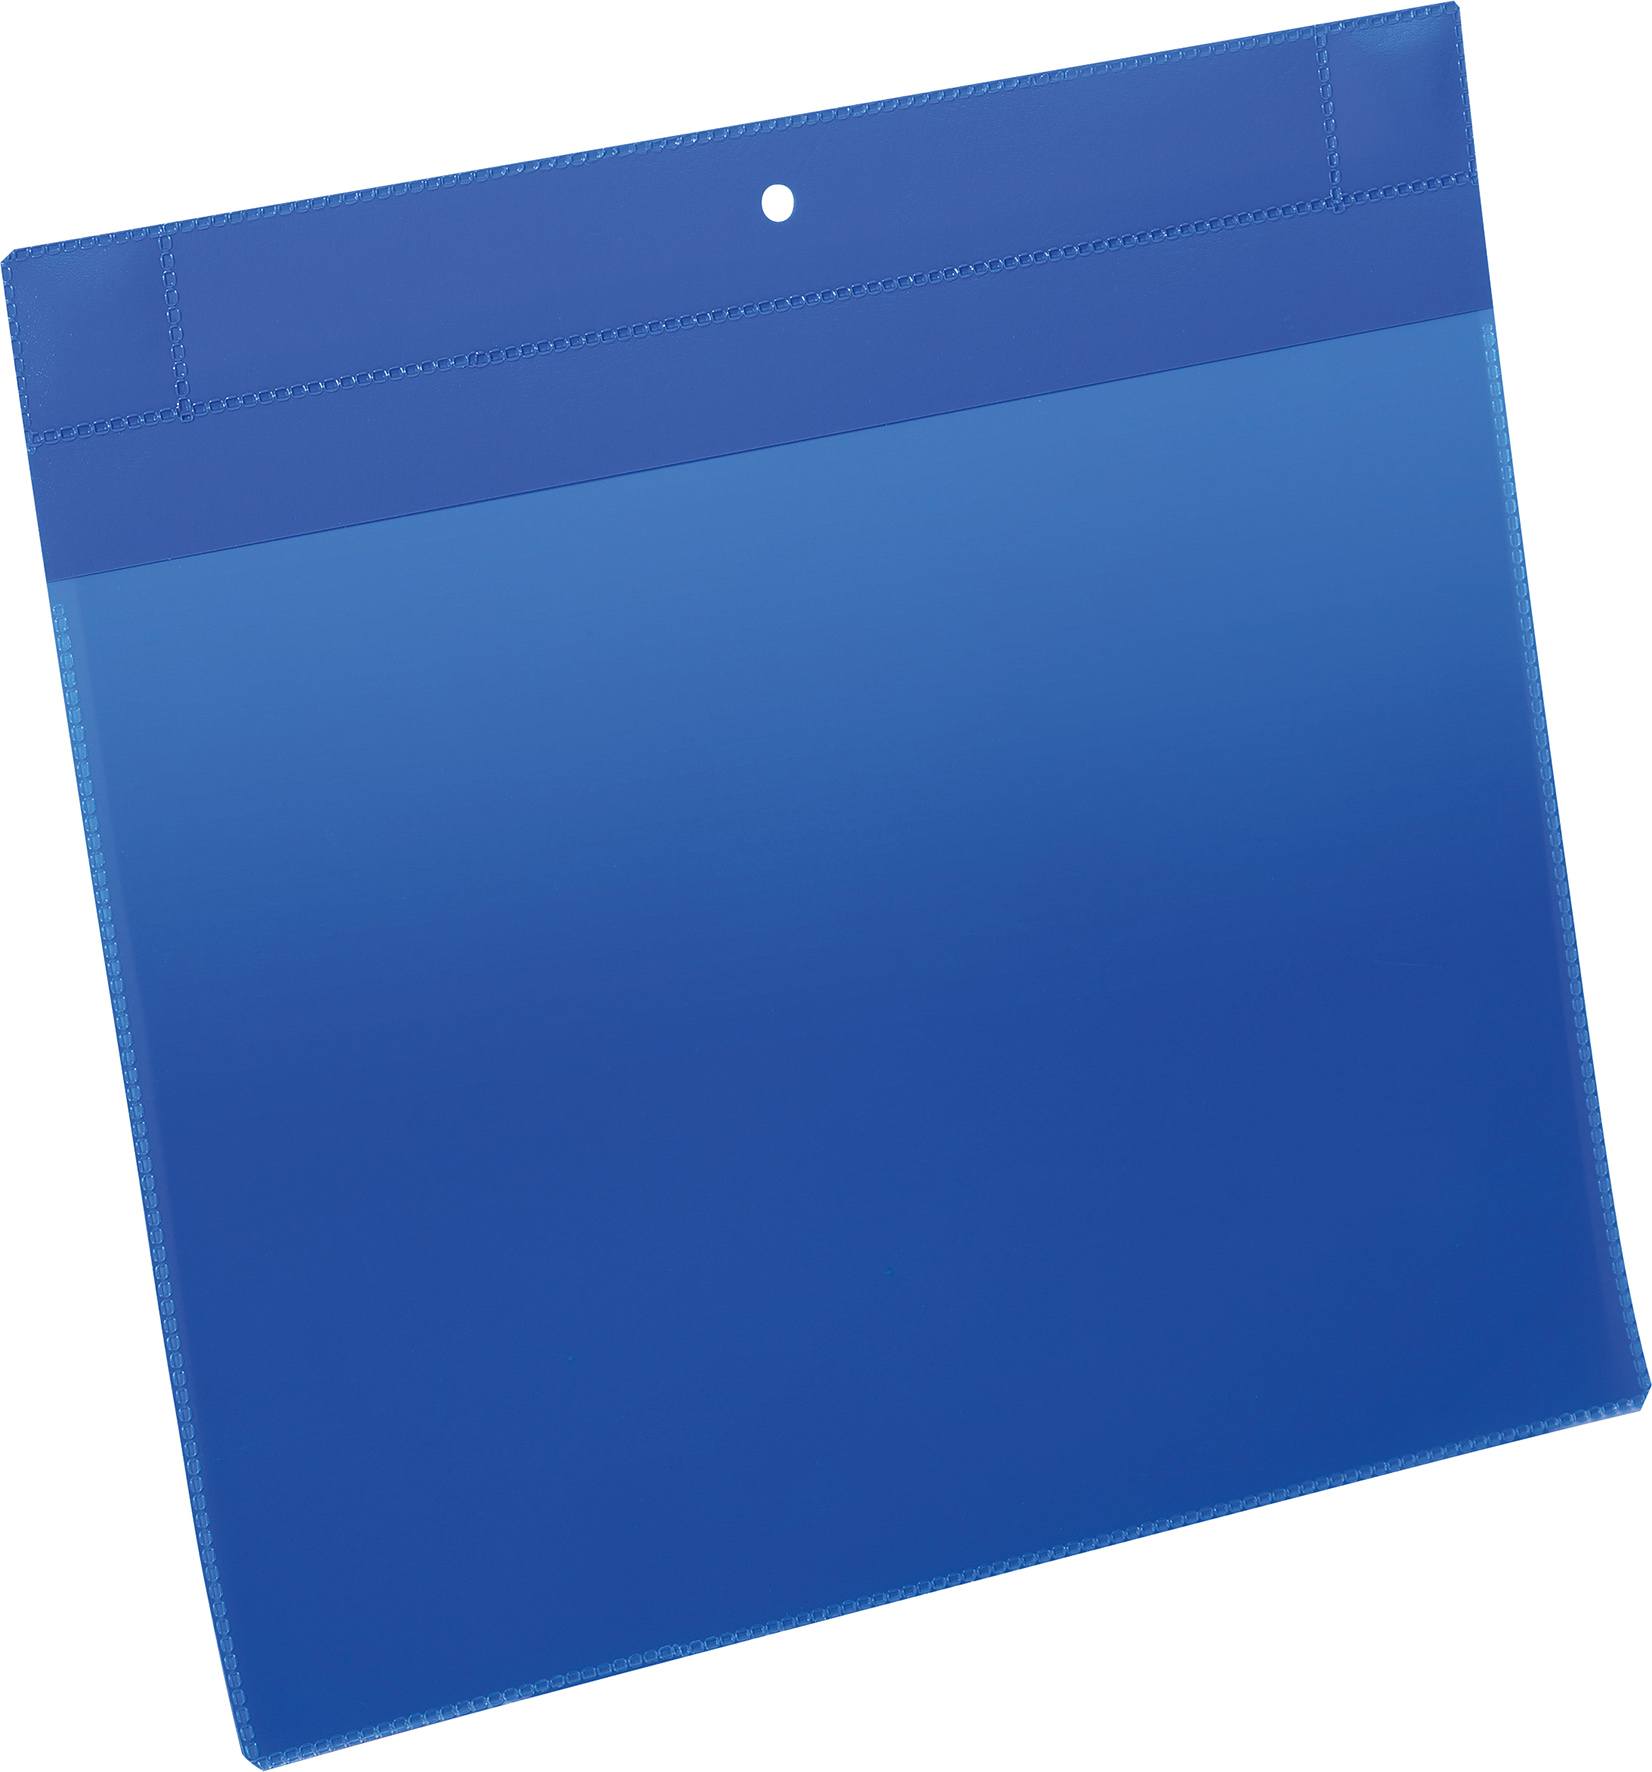 [8552727] Plastficka Plus A4L magnet blå